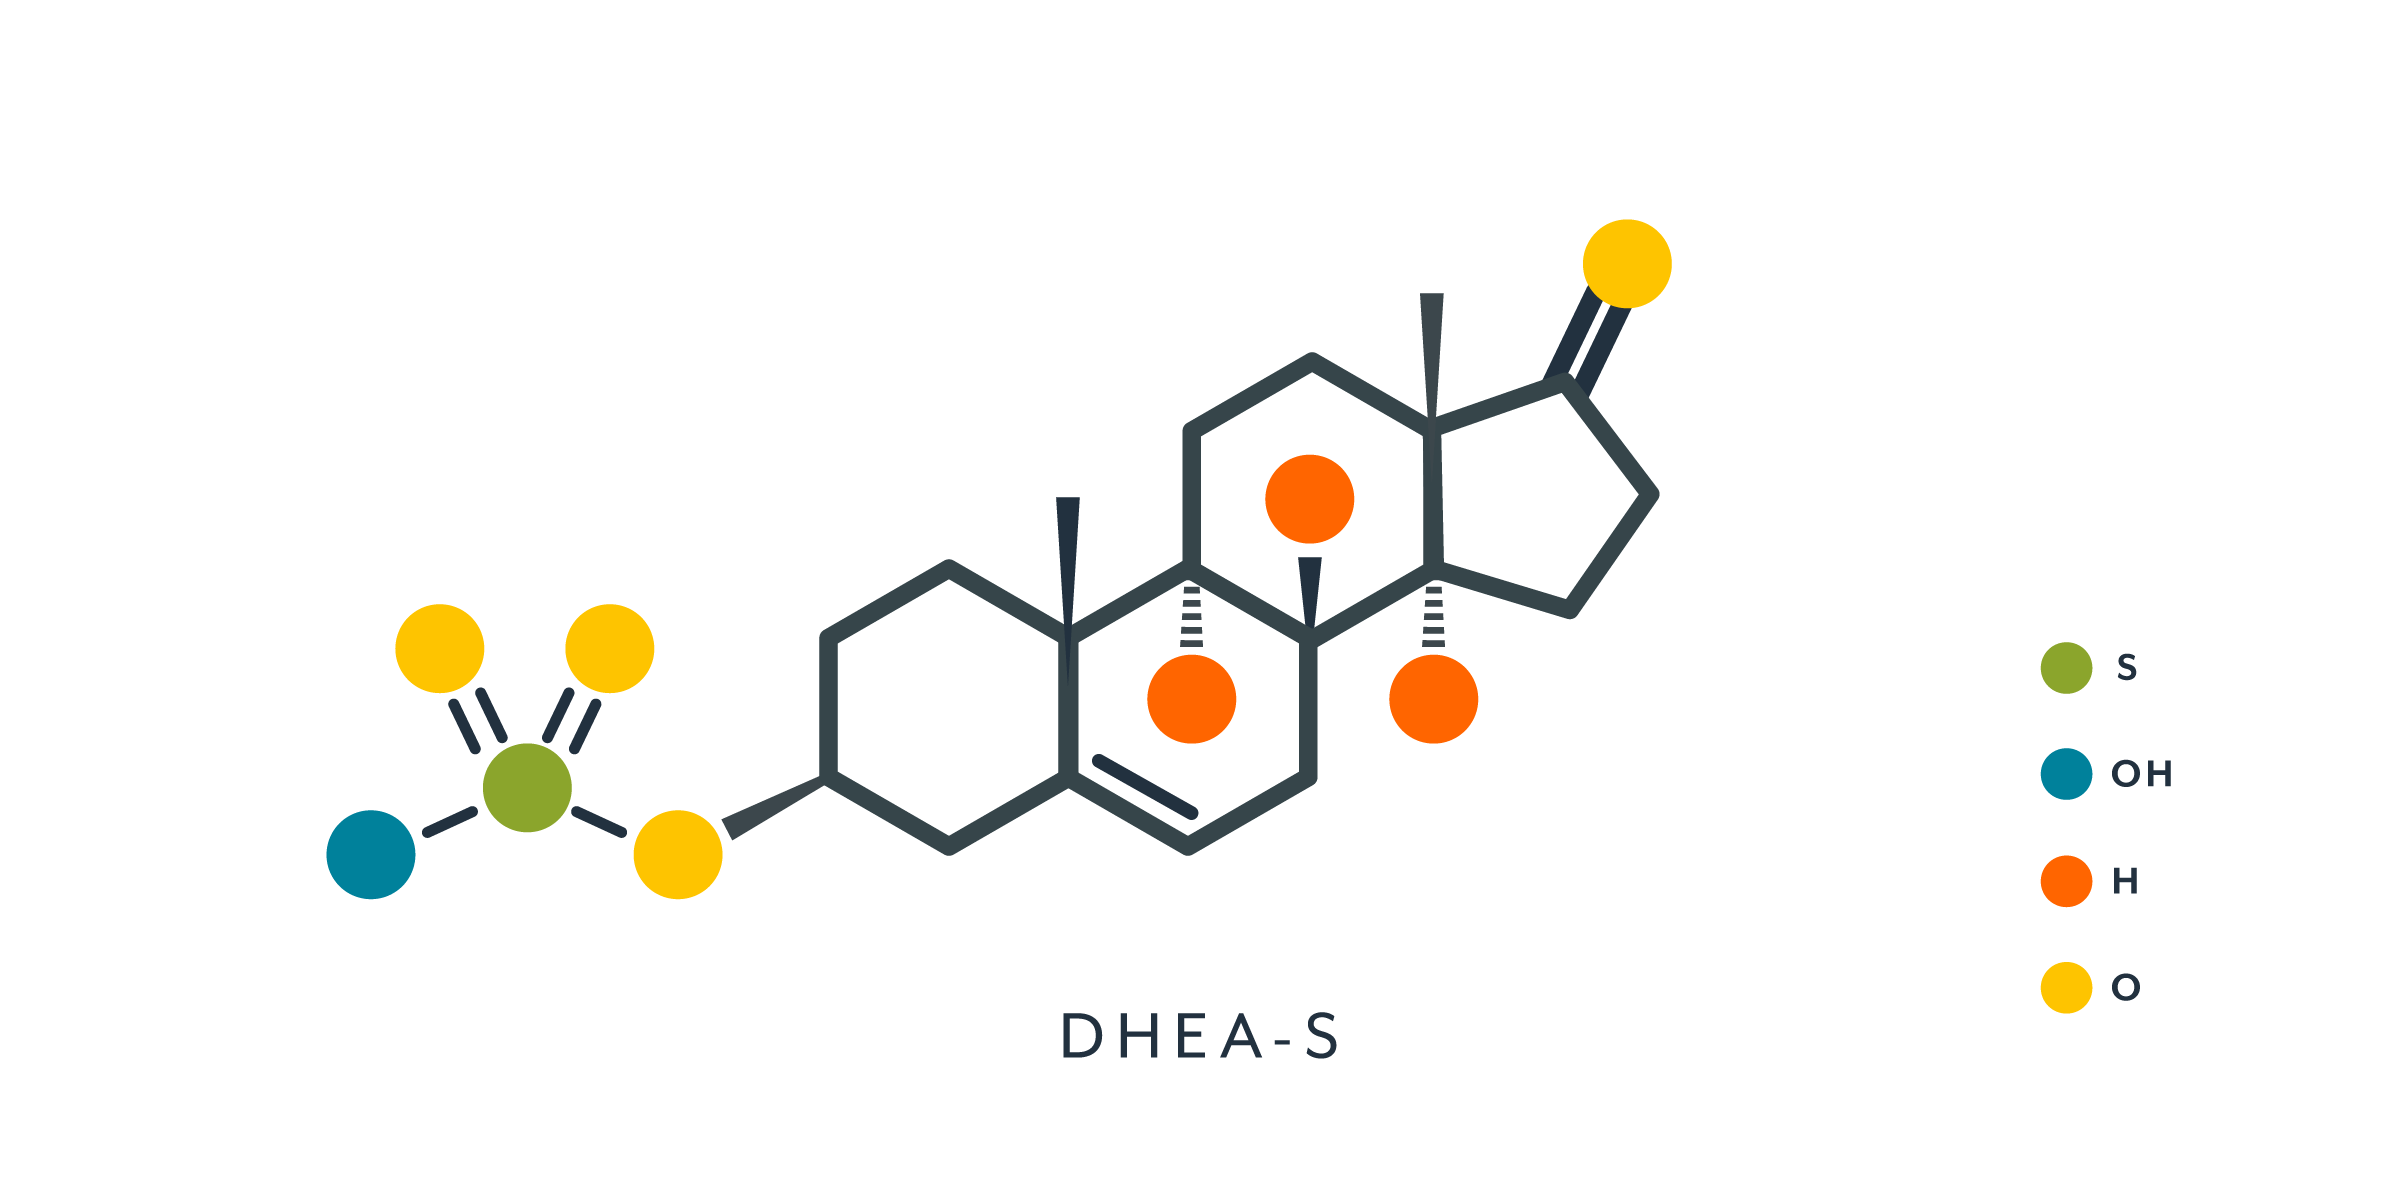 A molecule of DHEA-S